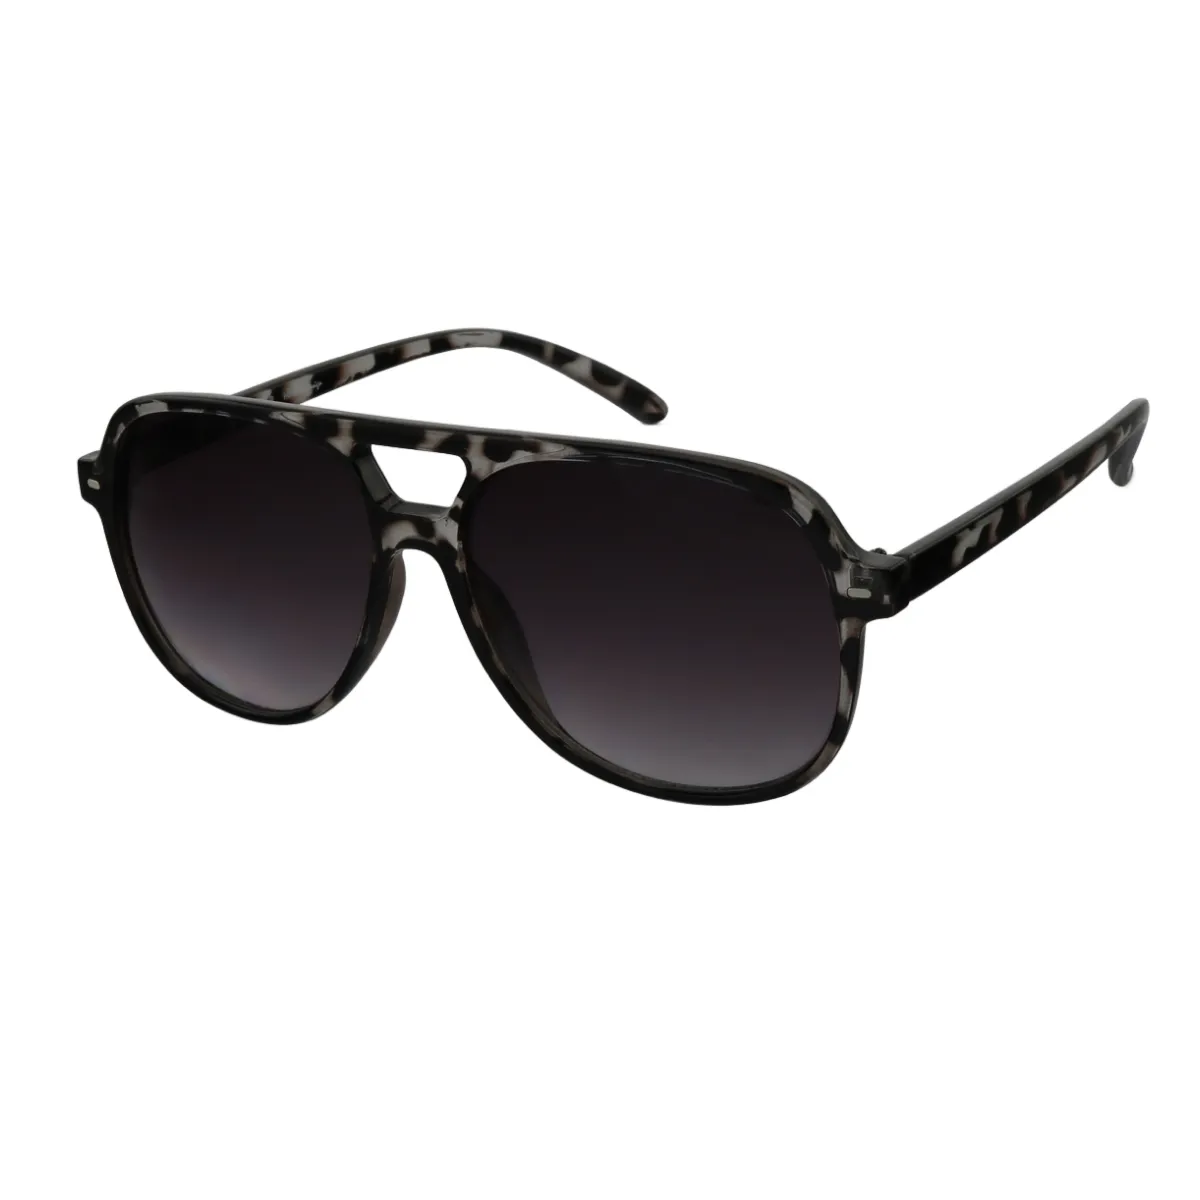 Fashion Aviator Black Sunglasses for Women